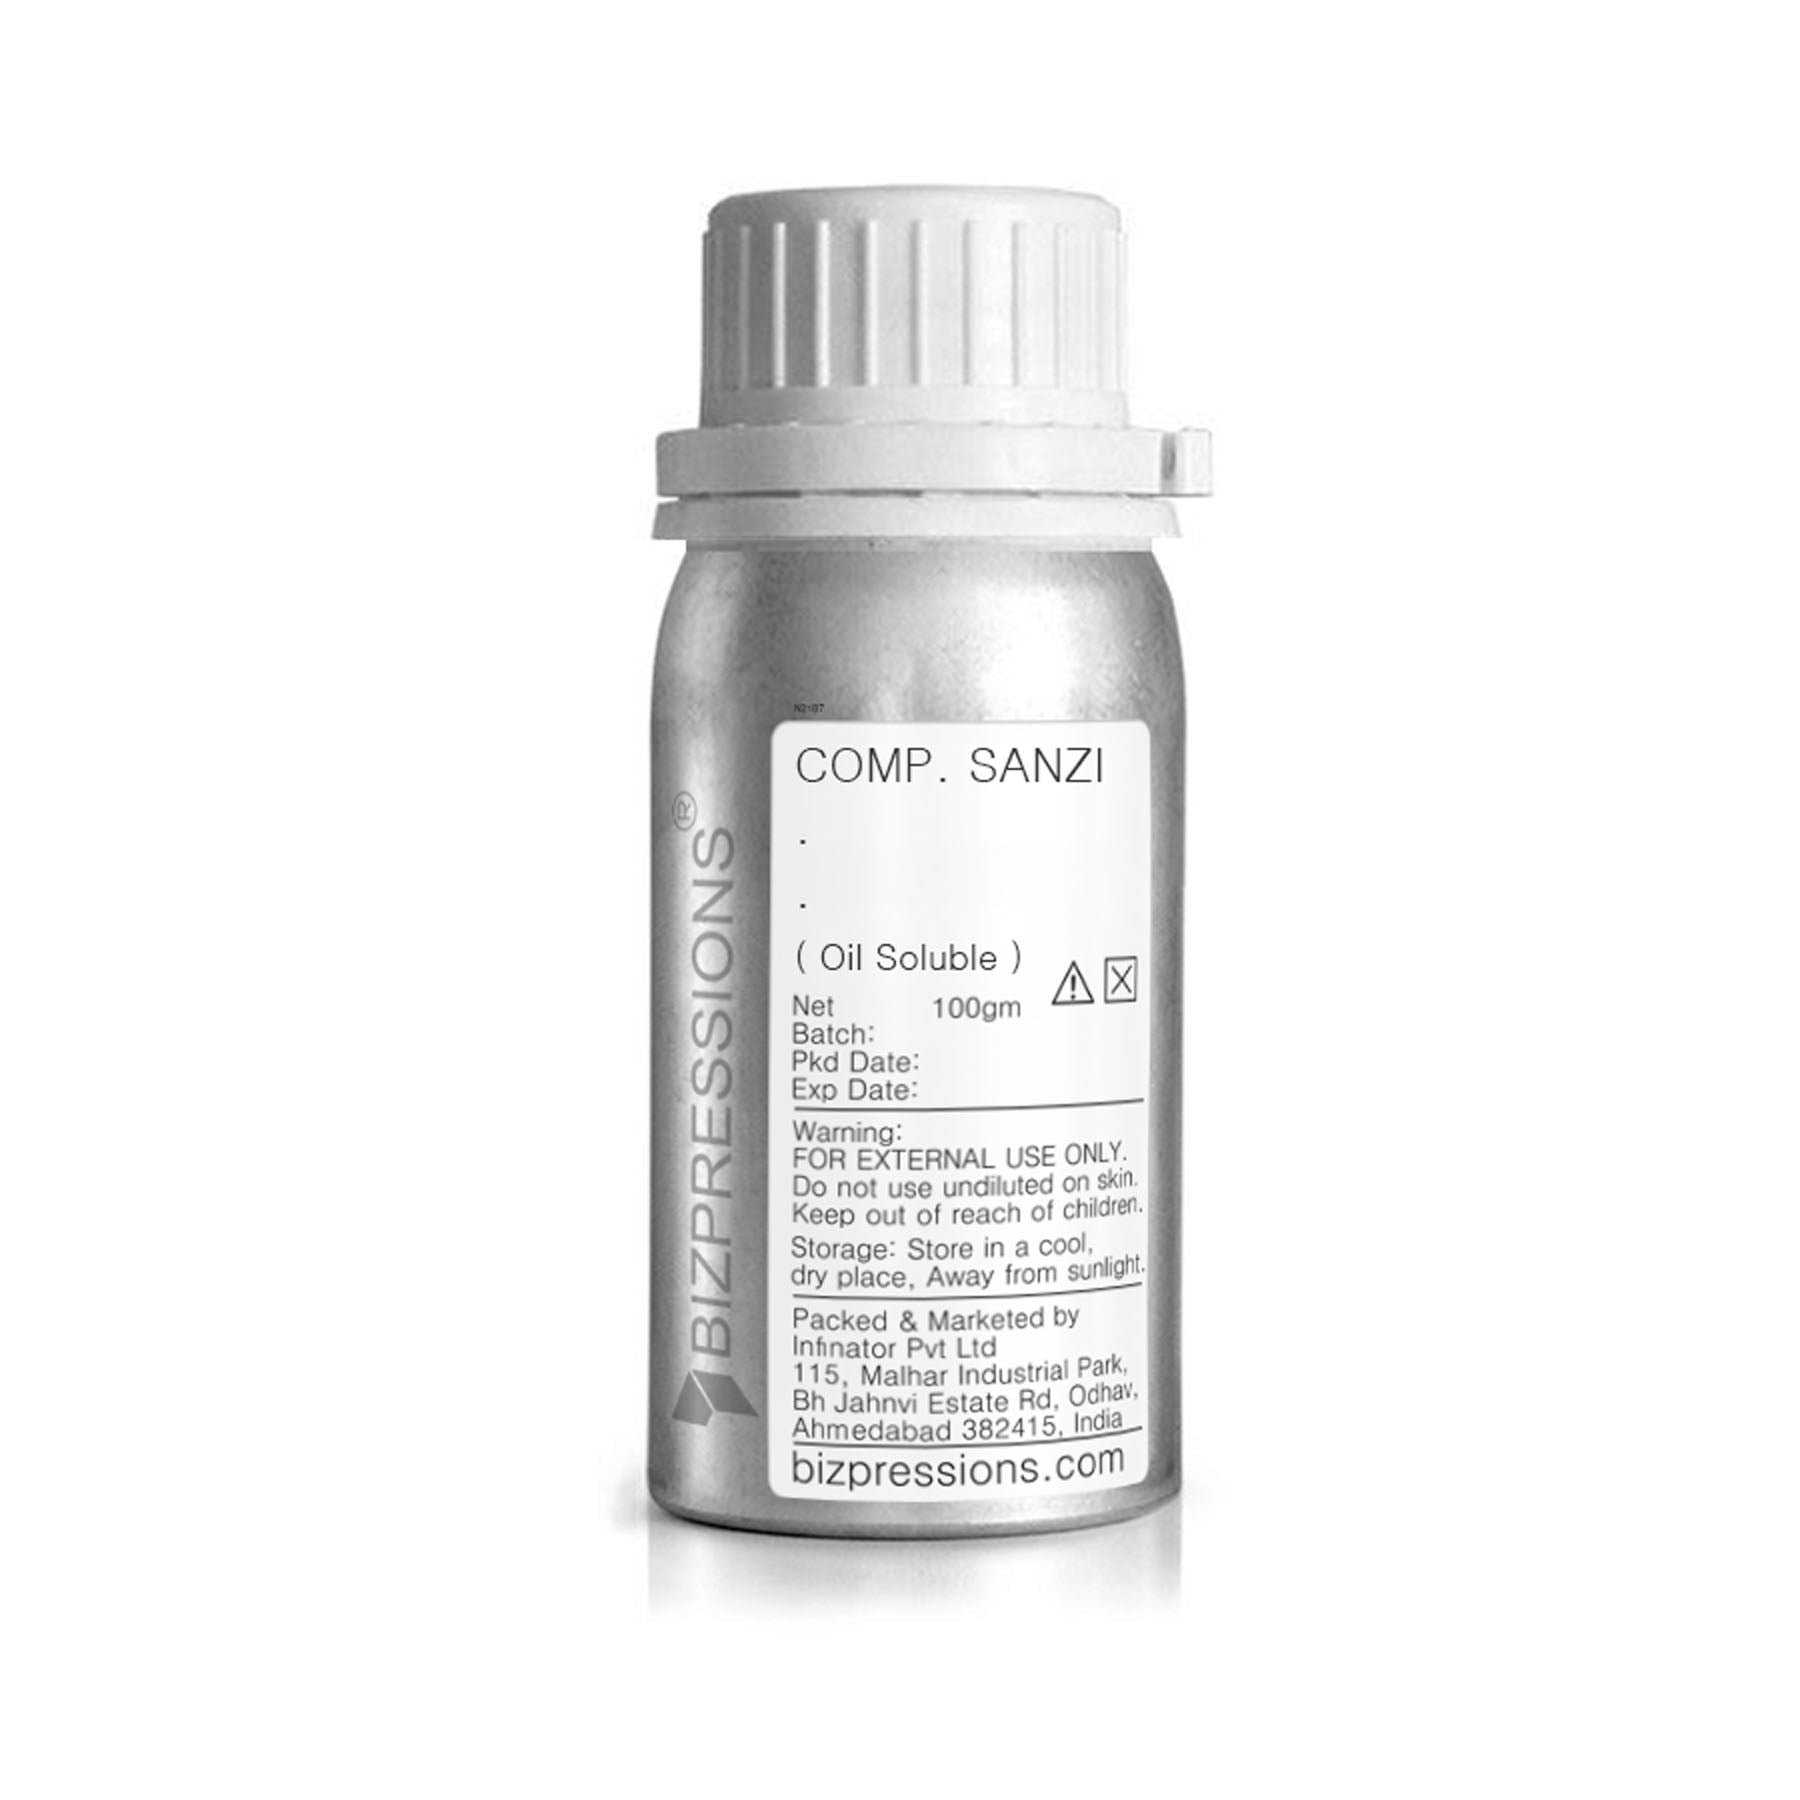 COMP. SANZI - Fragrance ( Oil Soluble ) - 100 gm